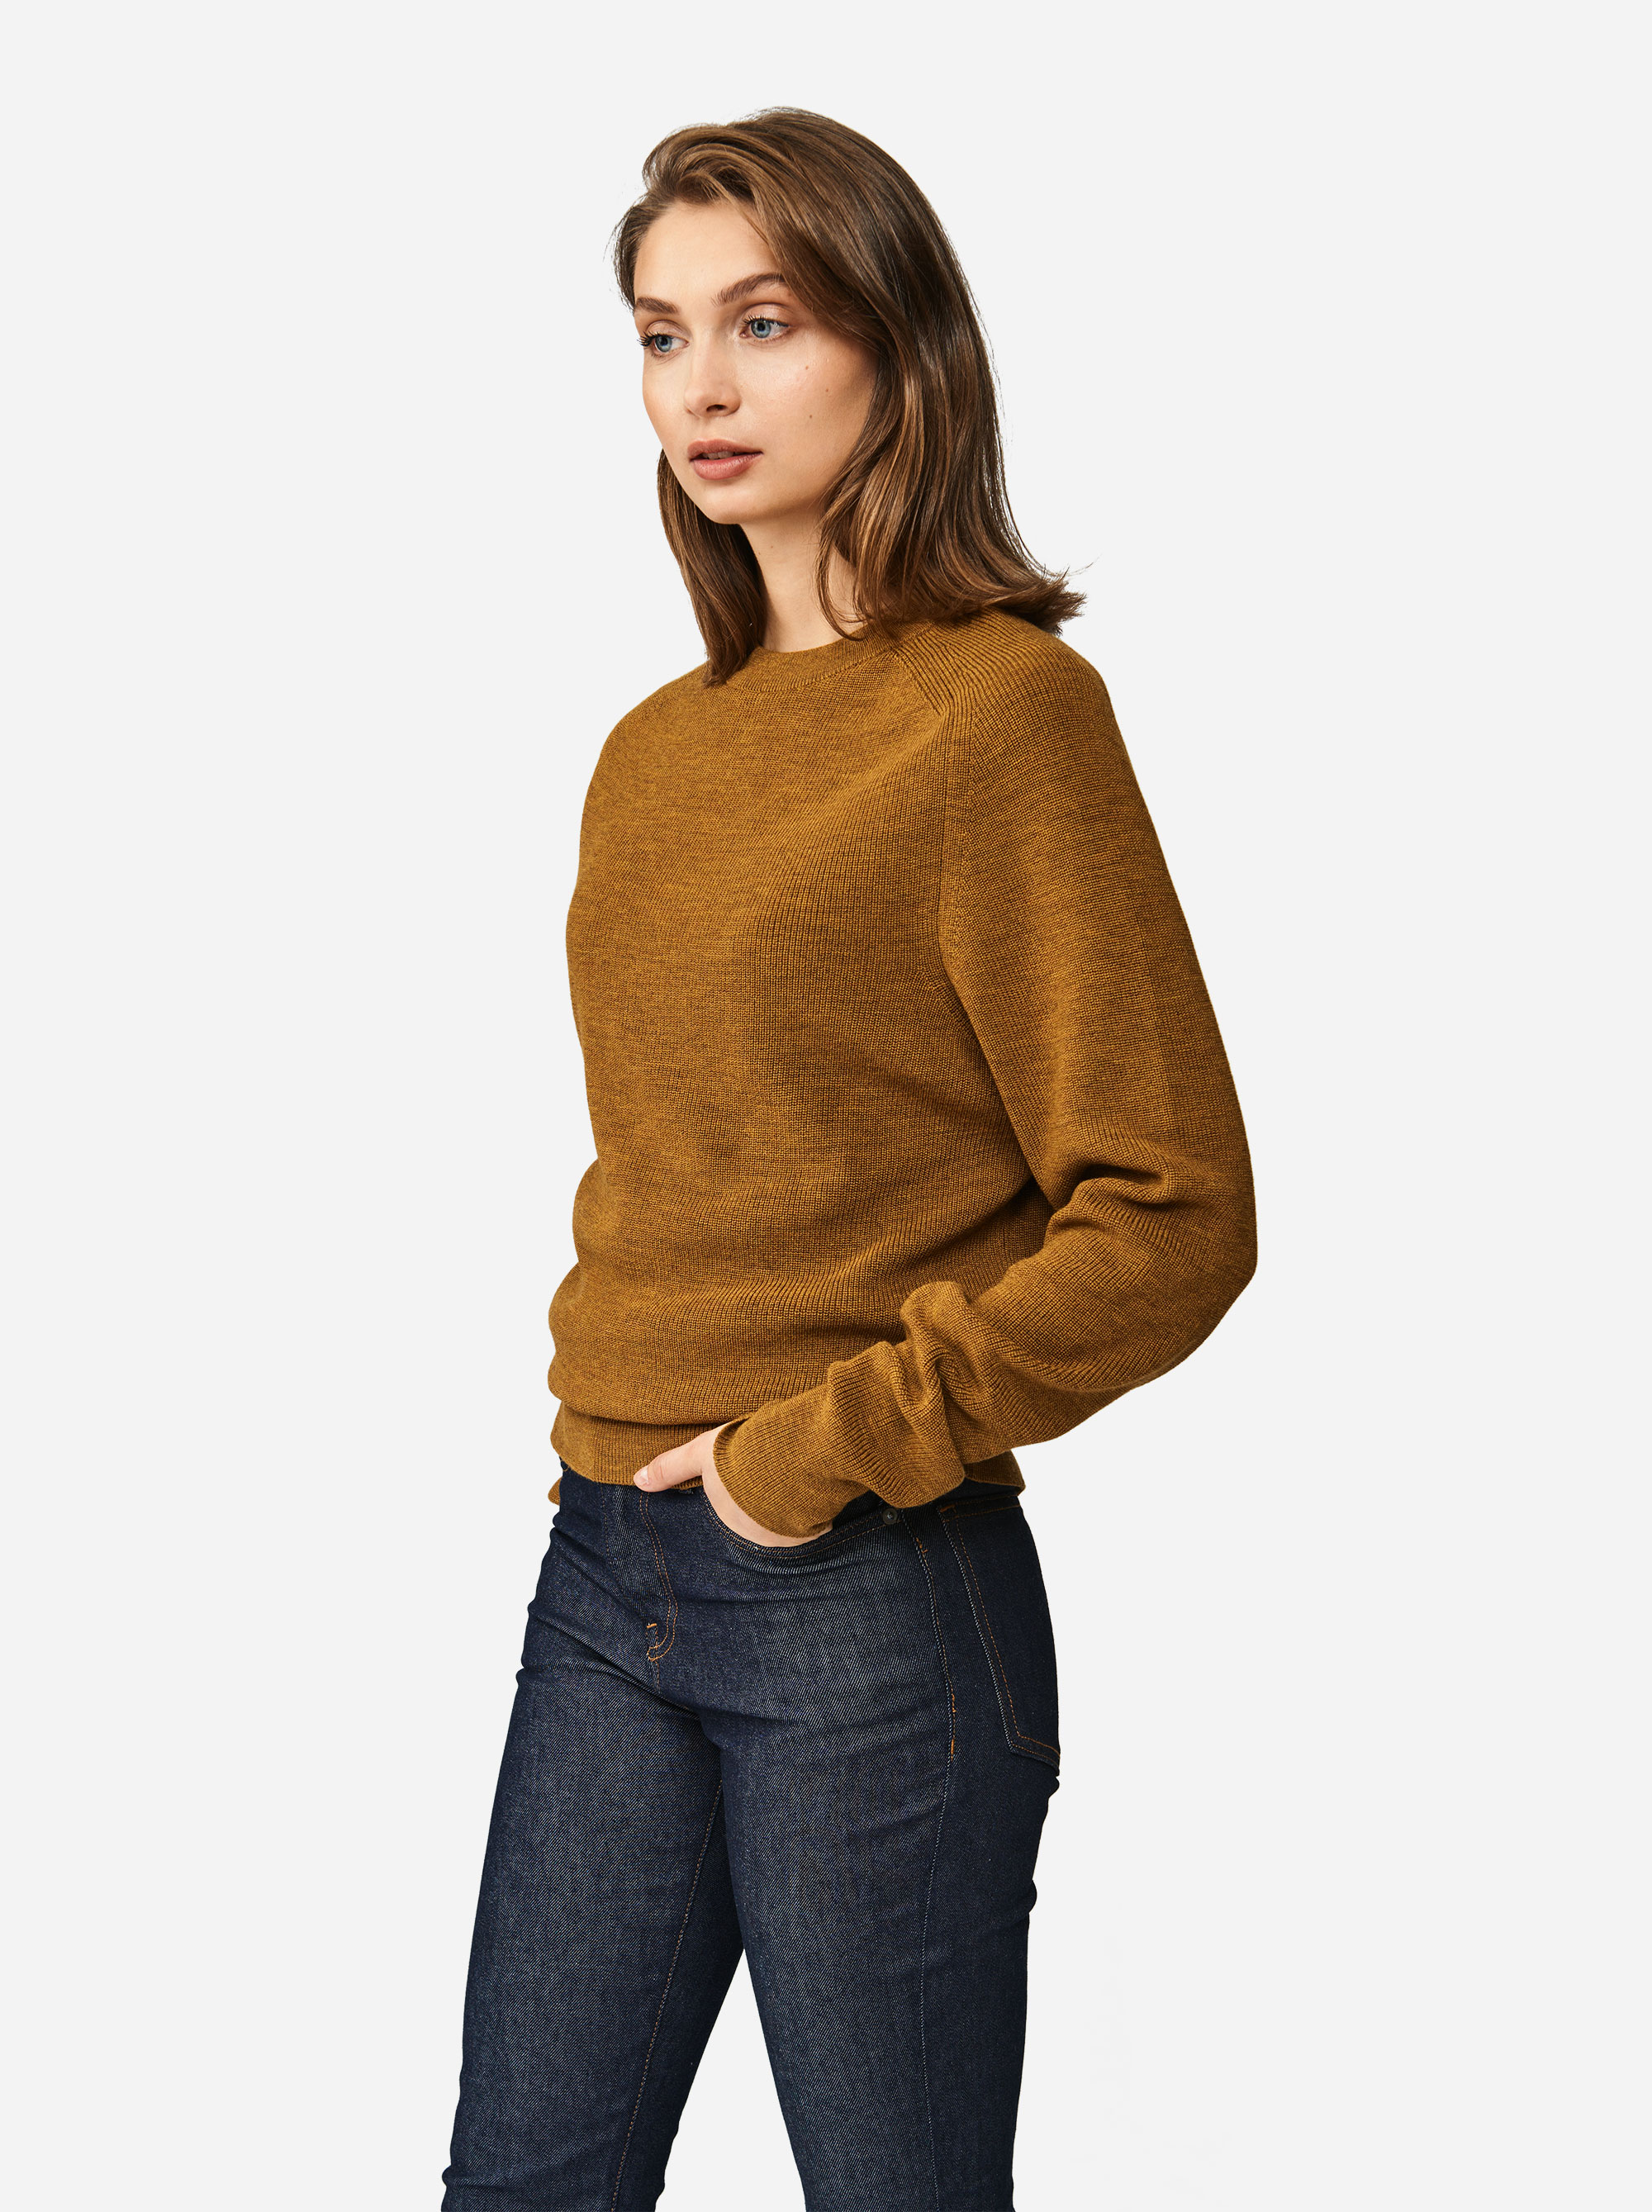 Teym - Crewneck - The Merino Sweater - Women - Mustard - 1